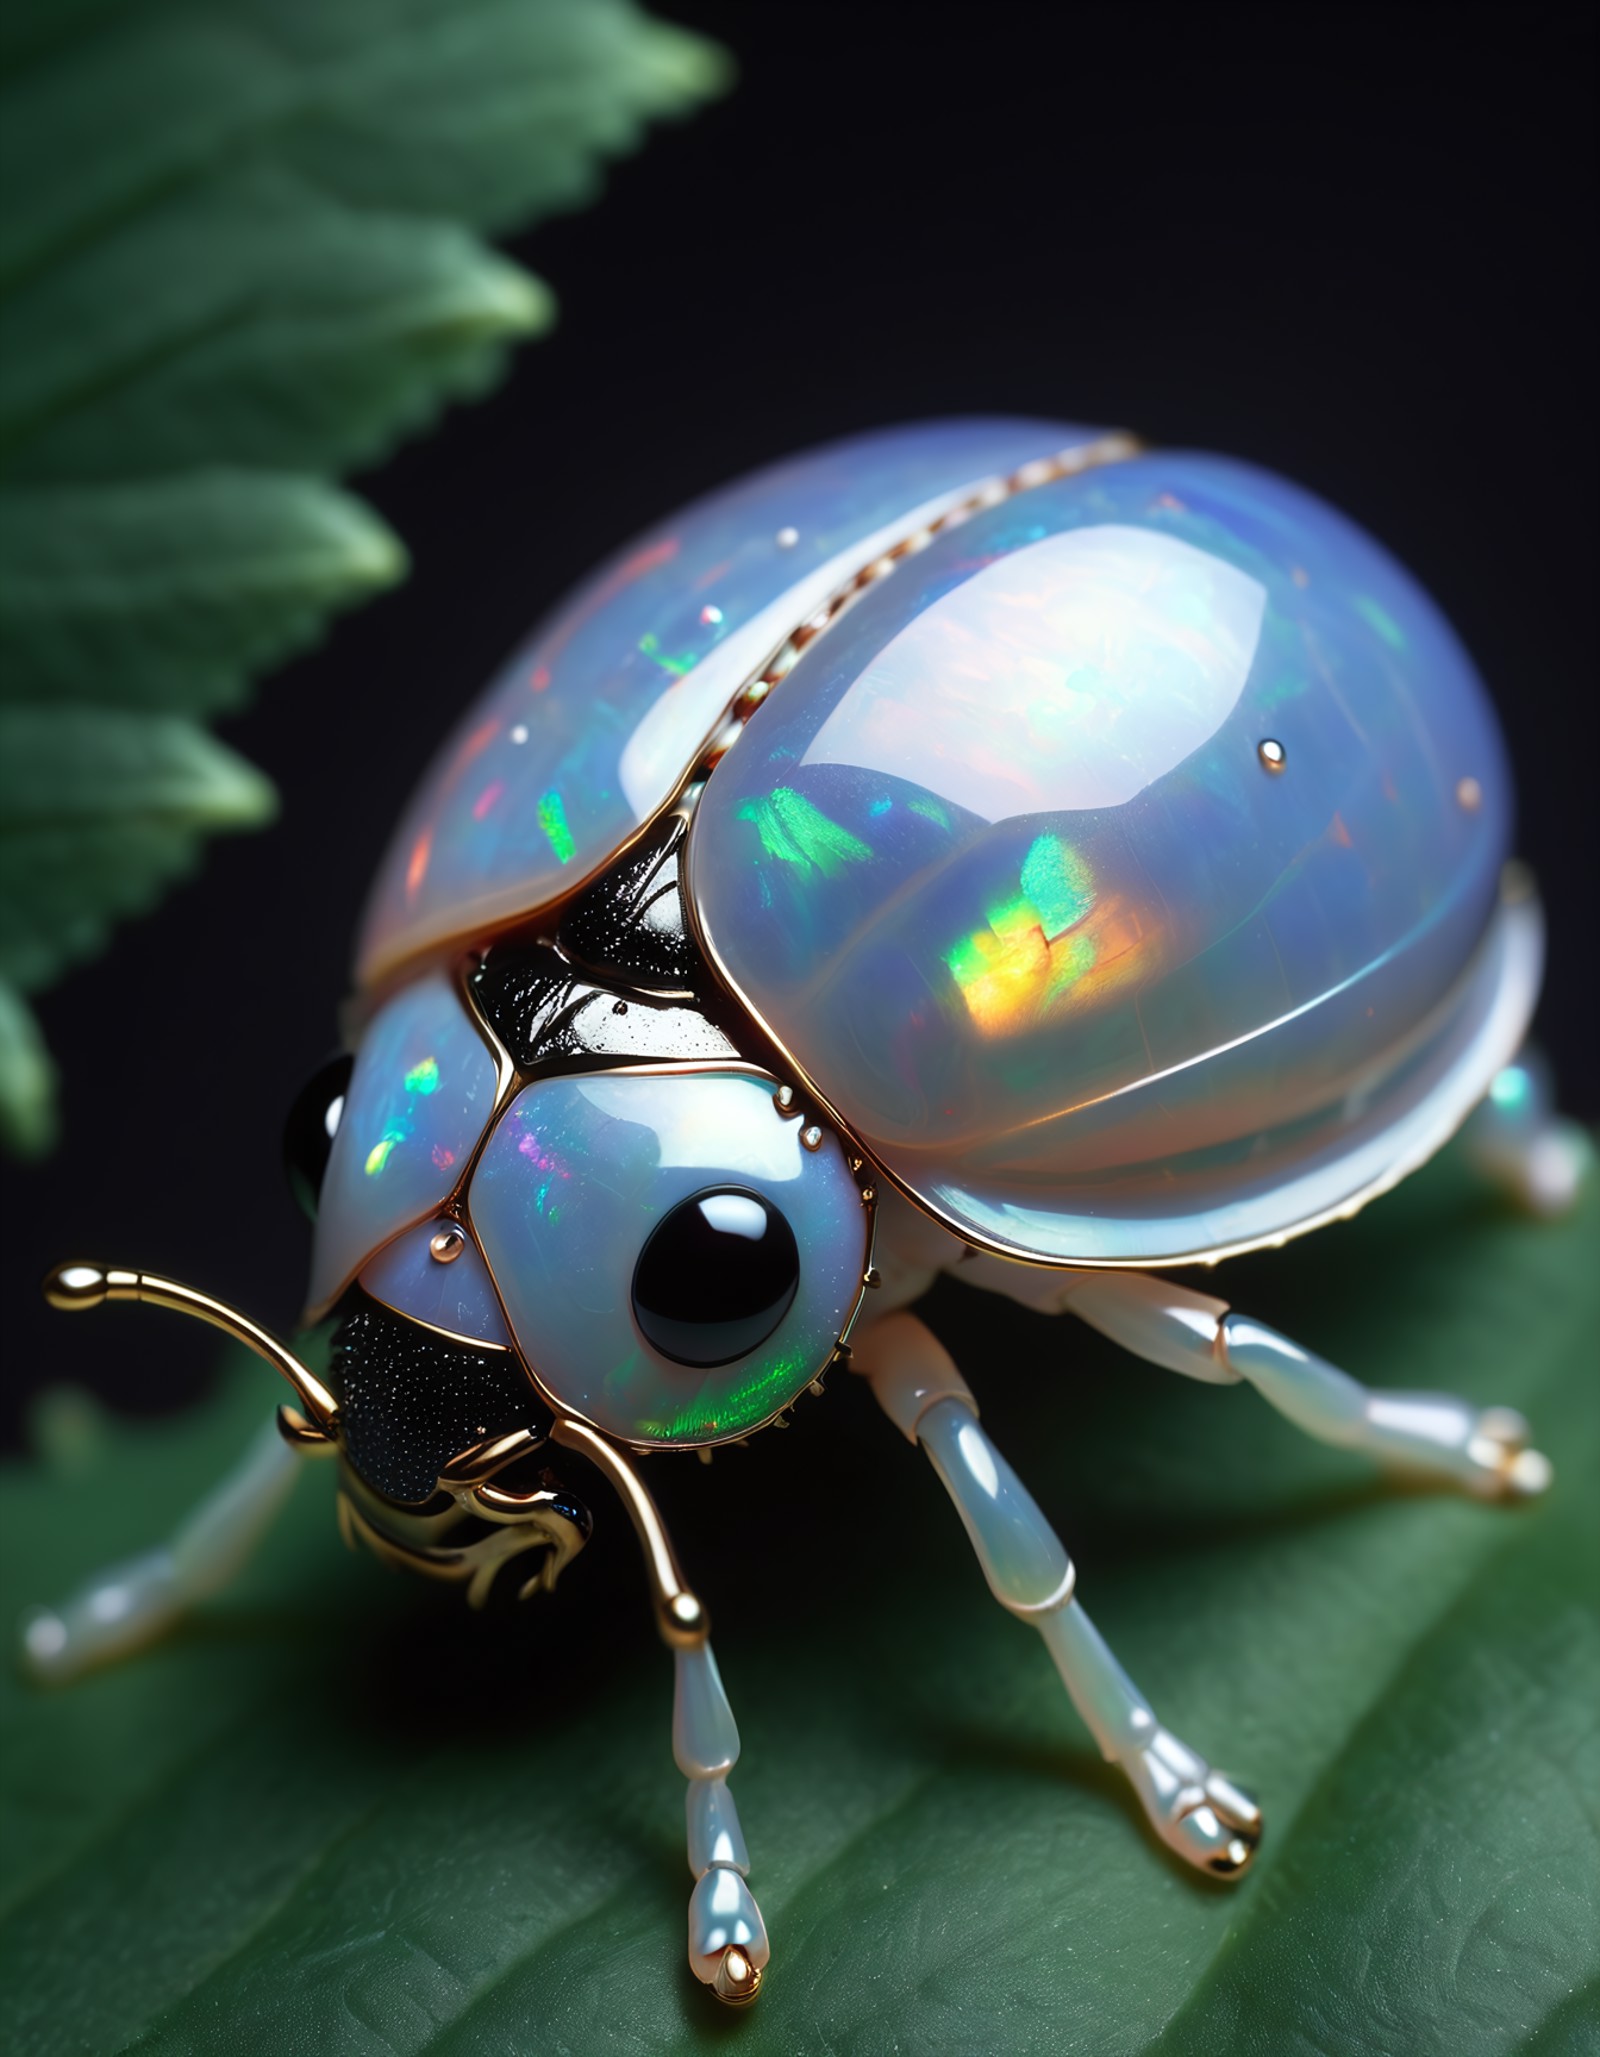 a OpalPearl opal ladybug on a leaf, very detailed, dramatic lighting, 4k, uhd, masterpiece